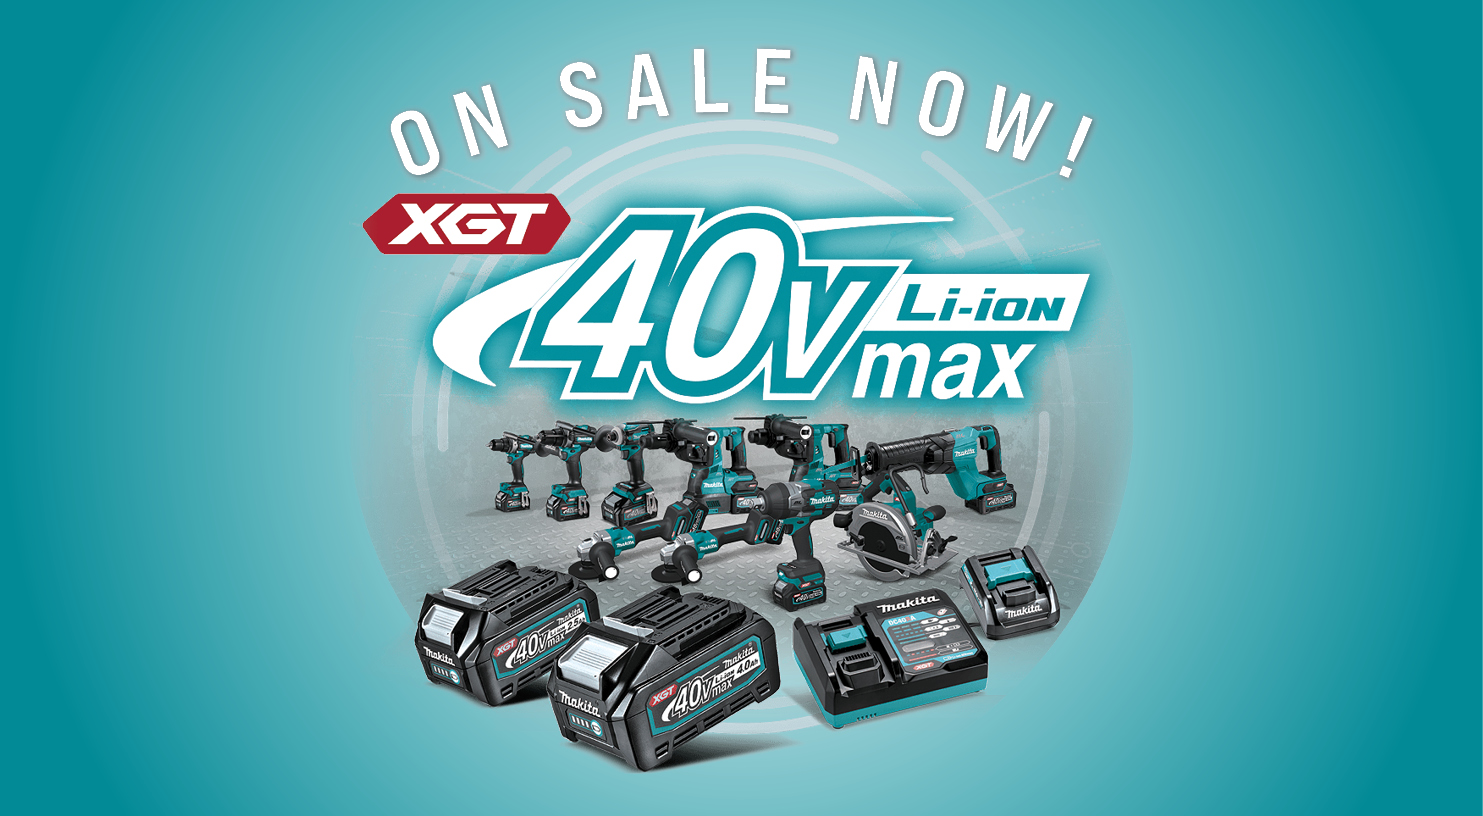 The New Makita XGT 40v Max Li-ion Line